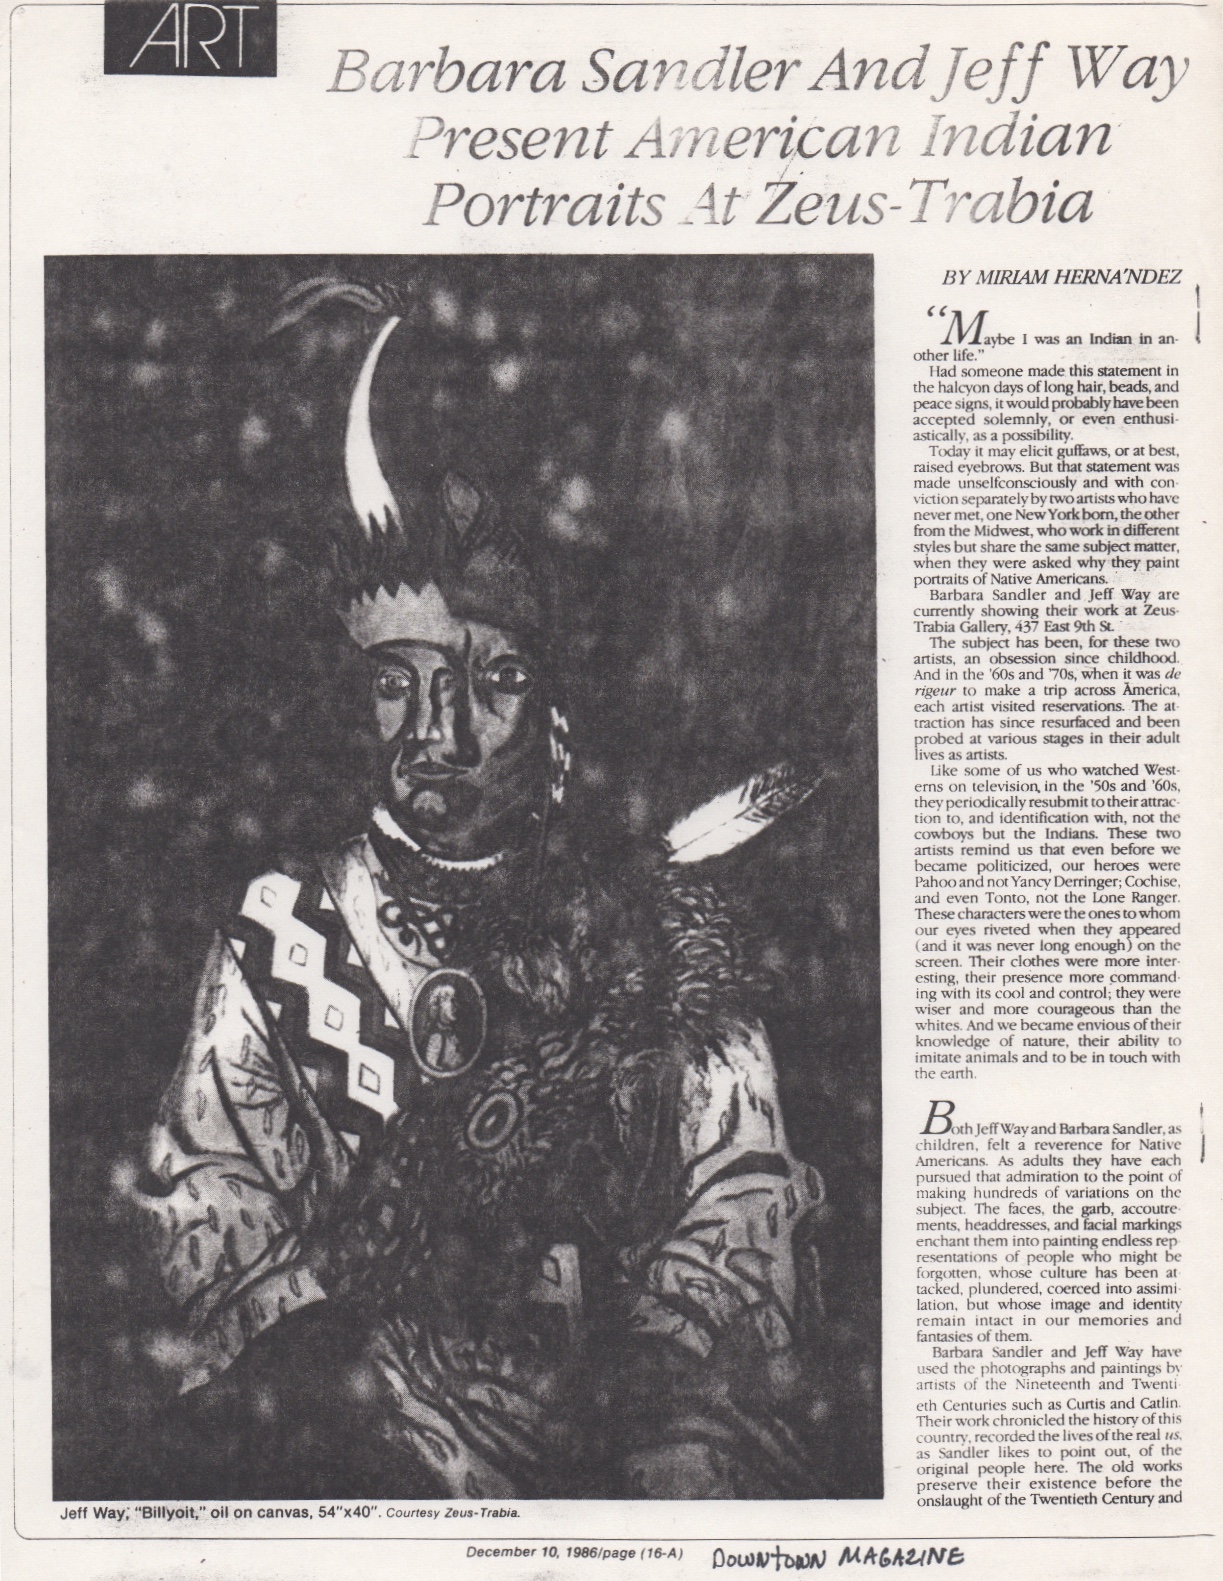 American Indian Portraits at Zeus-Trabia, Hernandez Miriam, Downtown Magazine, Dec 1986, with Barbara Sandler